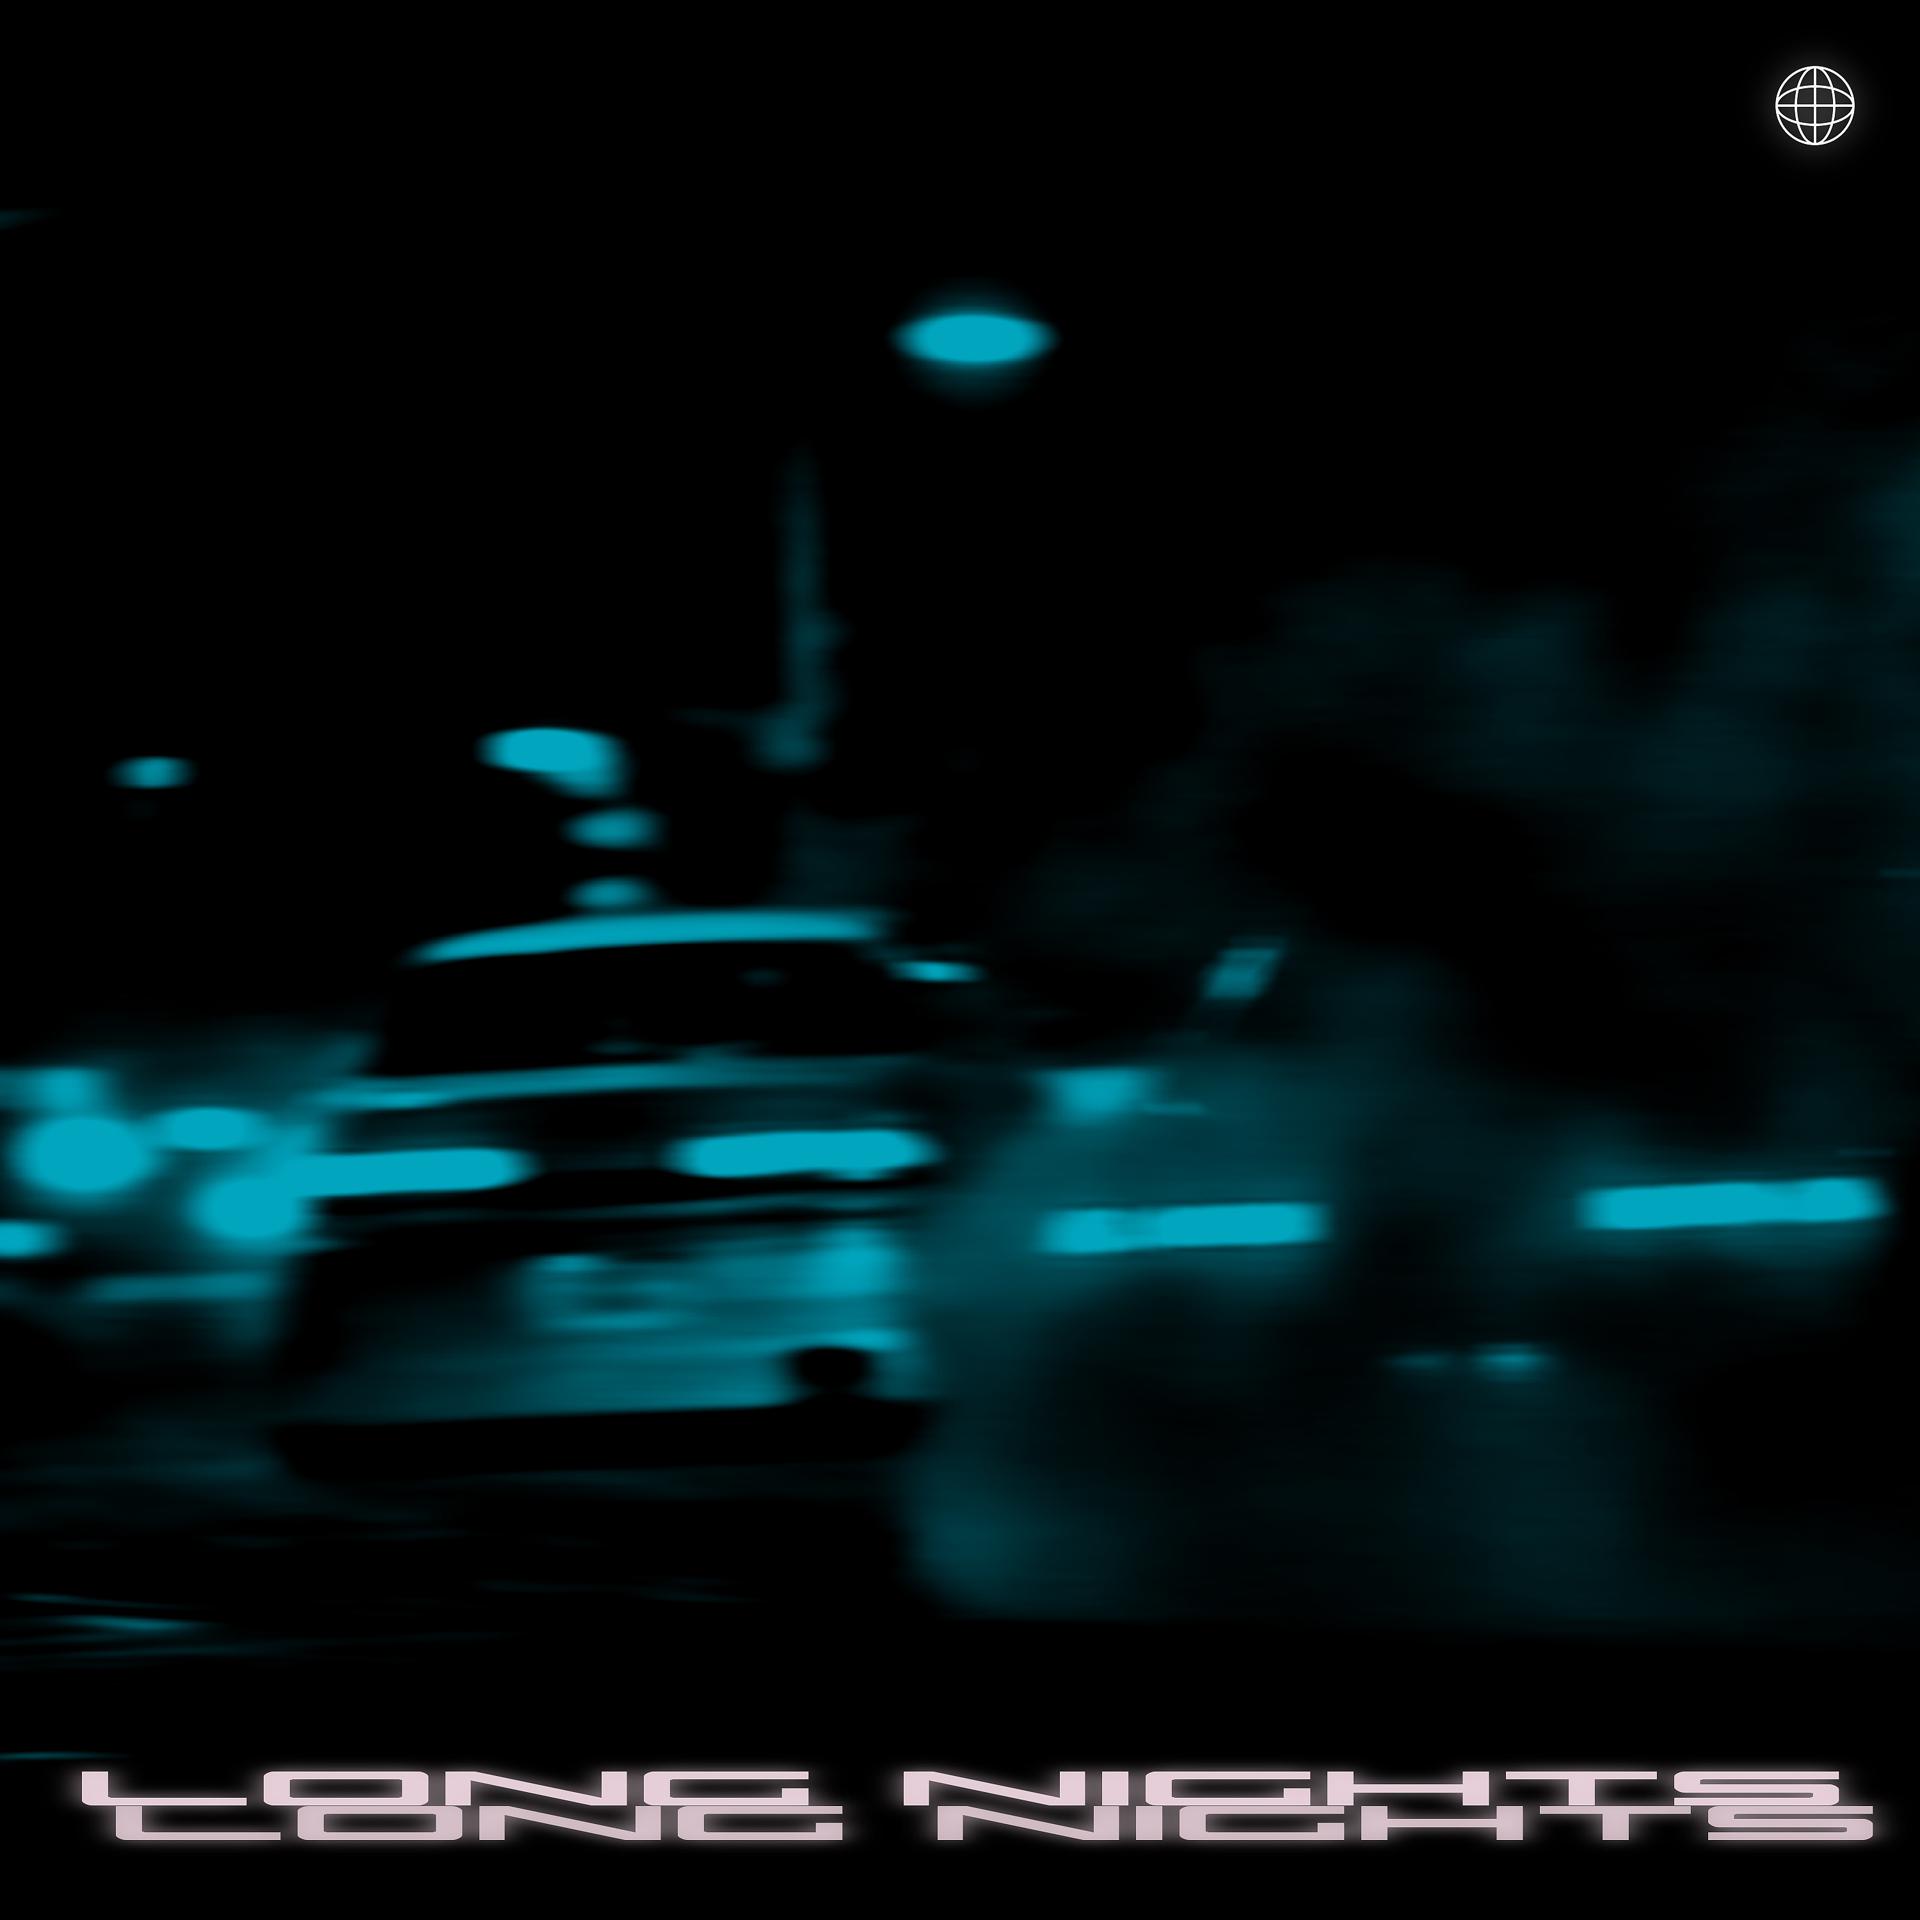 Постер альбома Long Nights